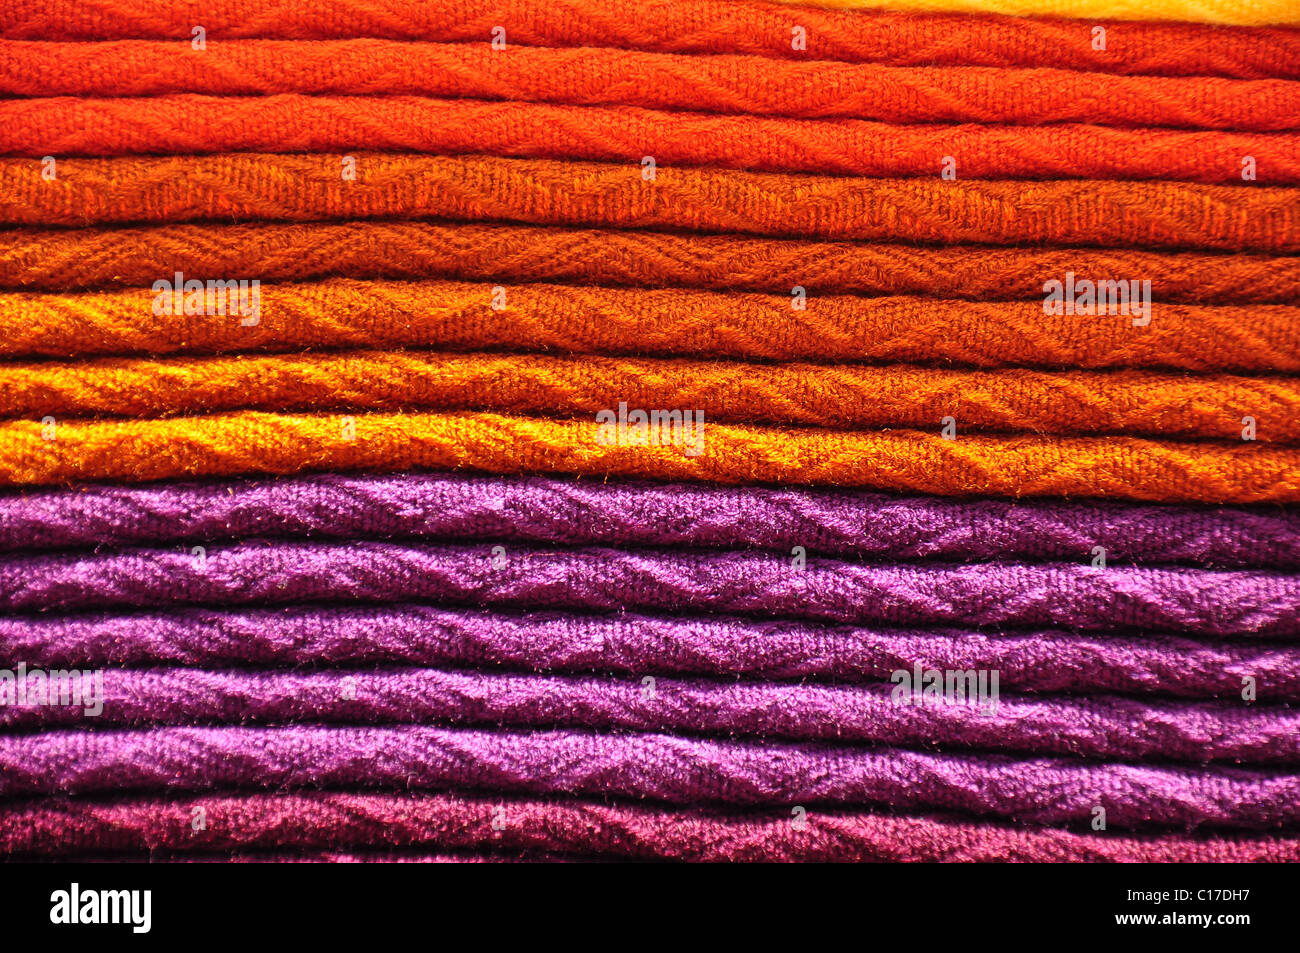 Pila di tessuti tradizionali tessuti alpaca coperte in arancione e viola Foto Stock